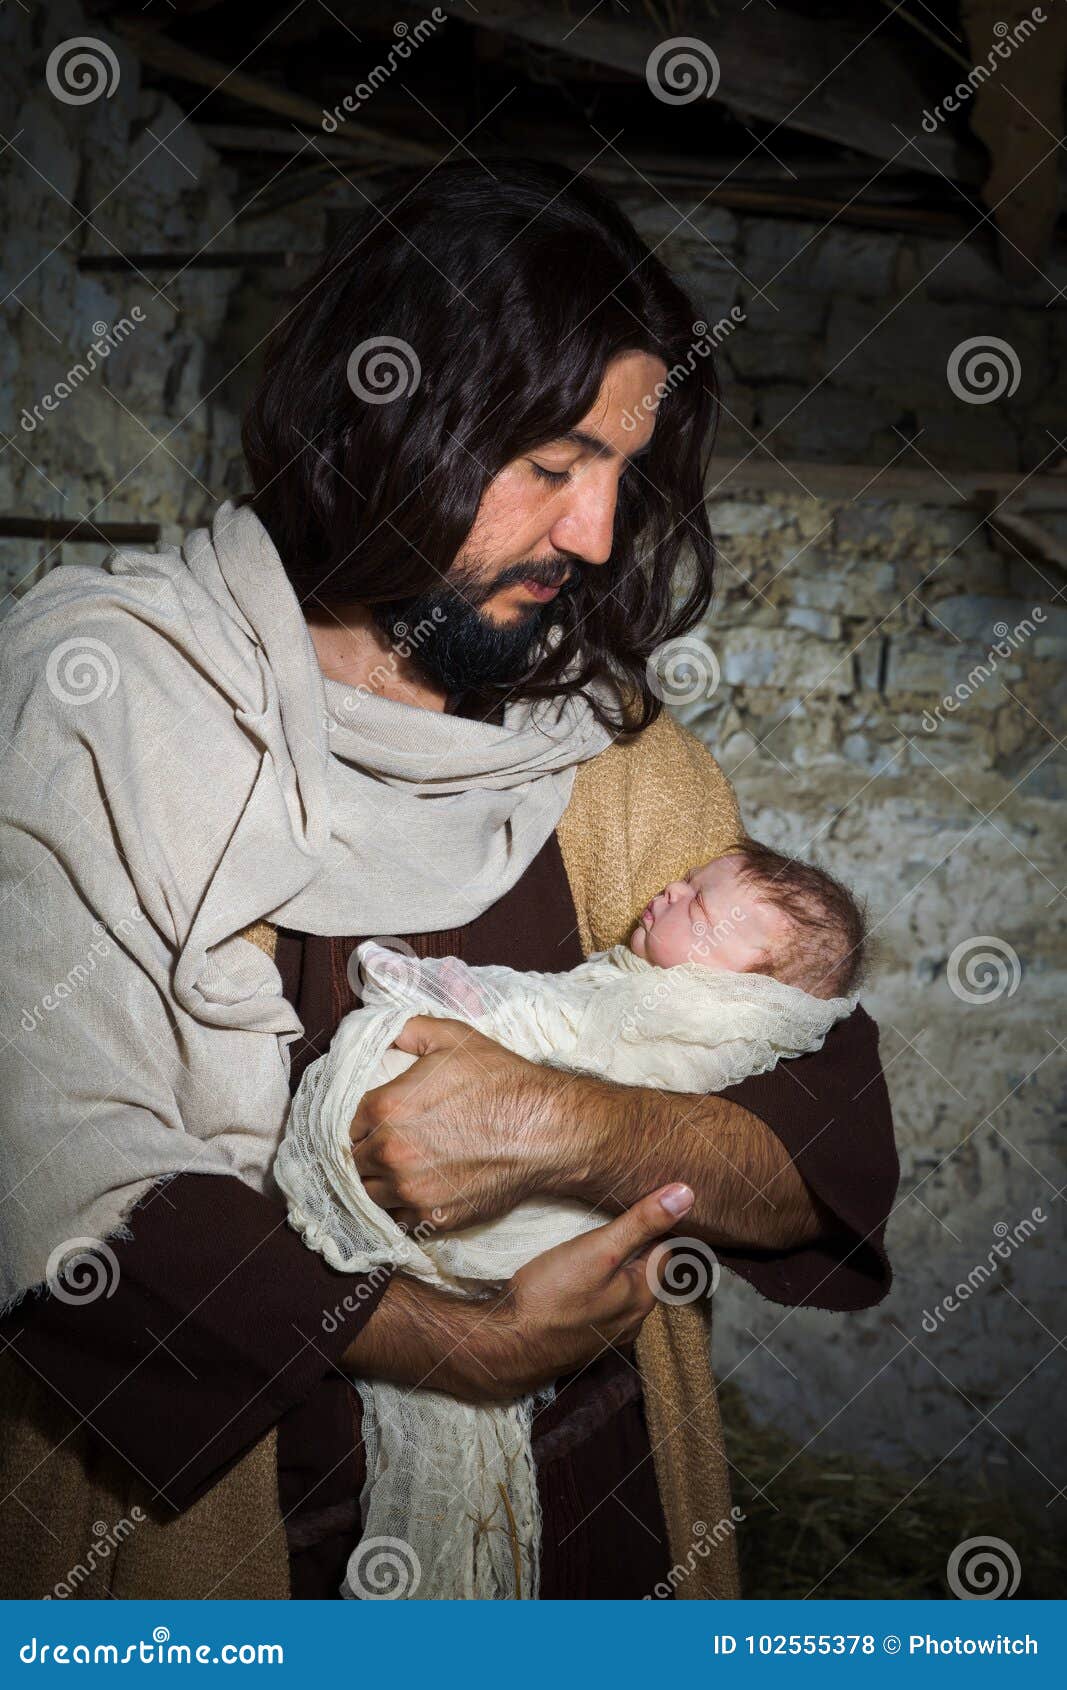 Was joseph father who jesus Joseph, Father